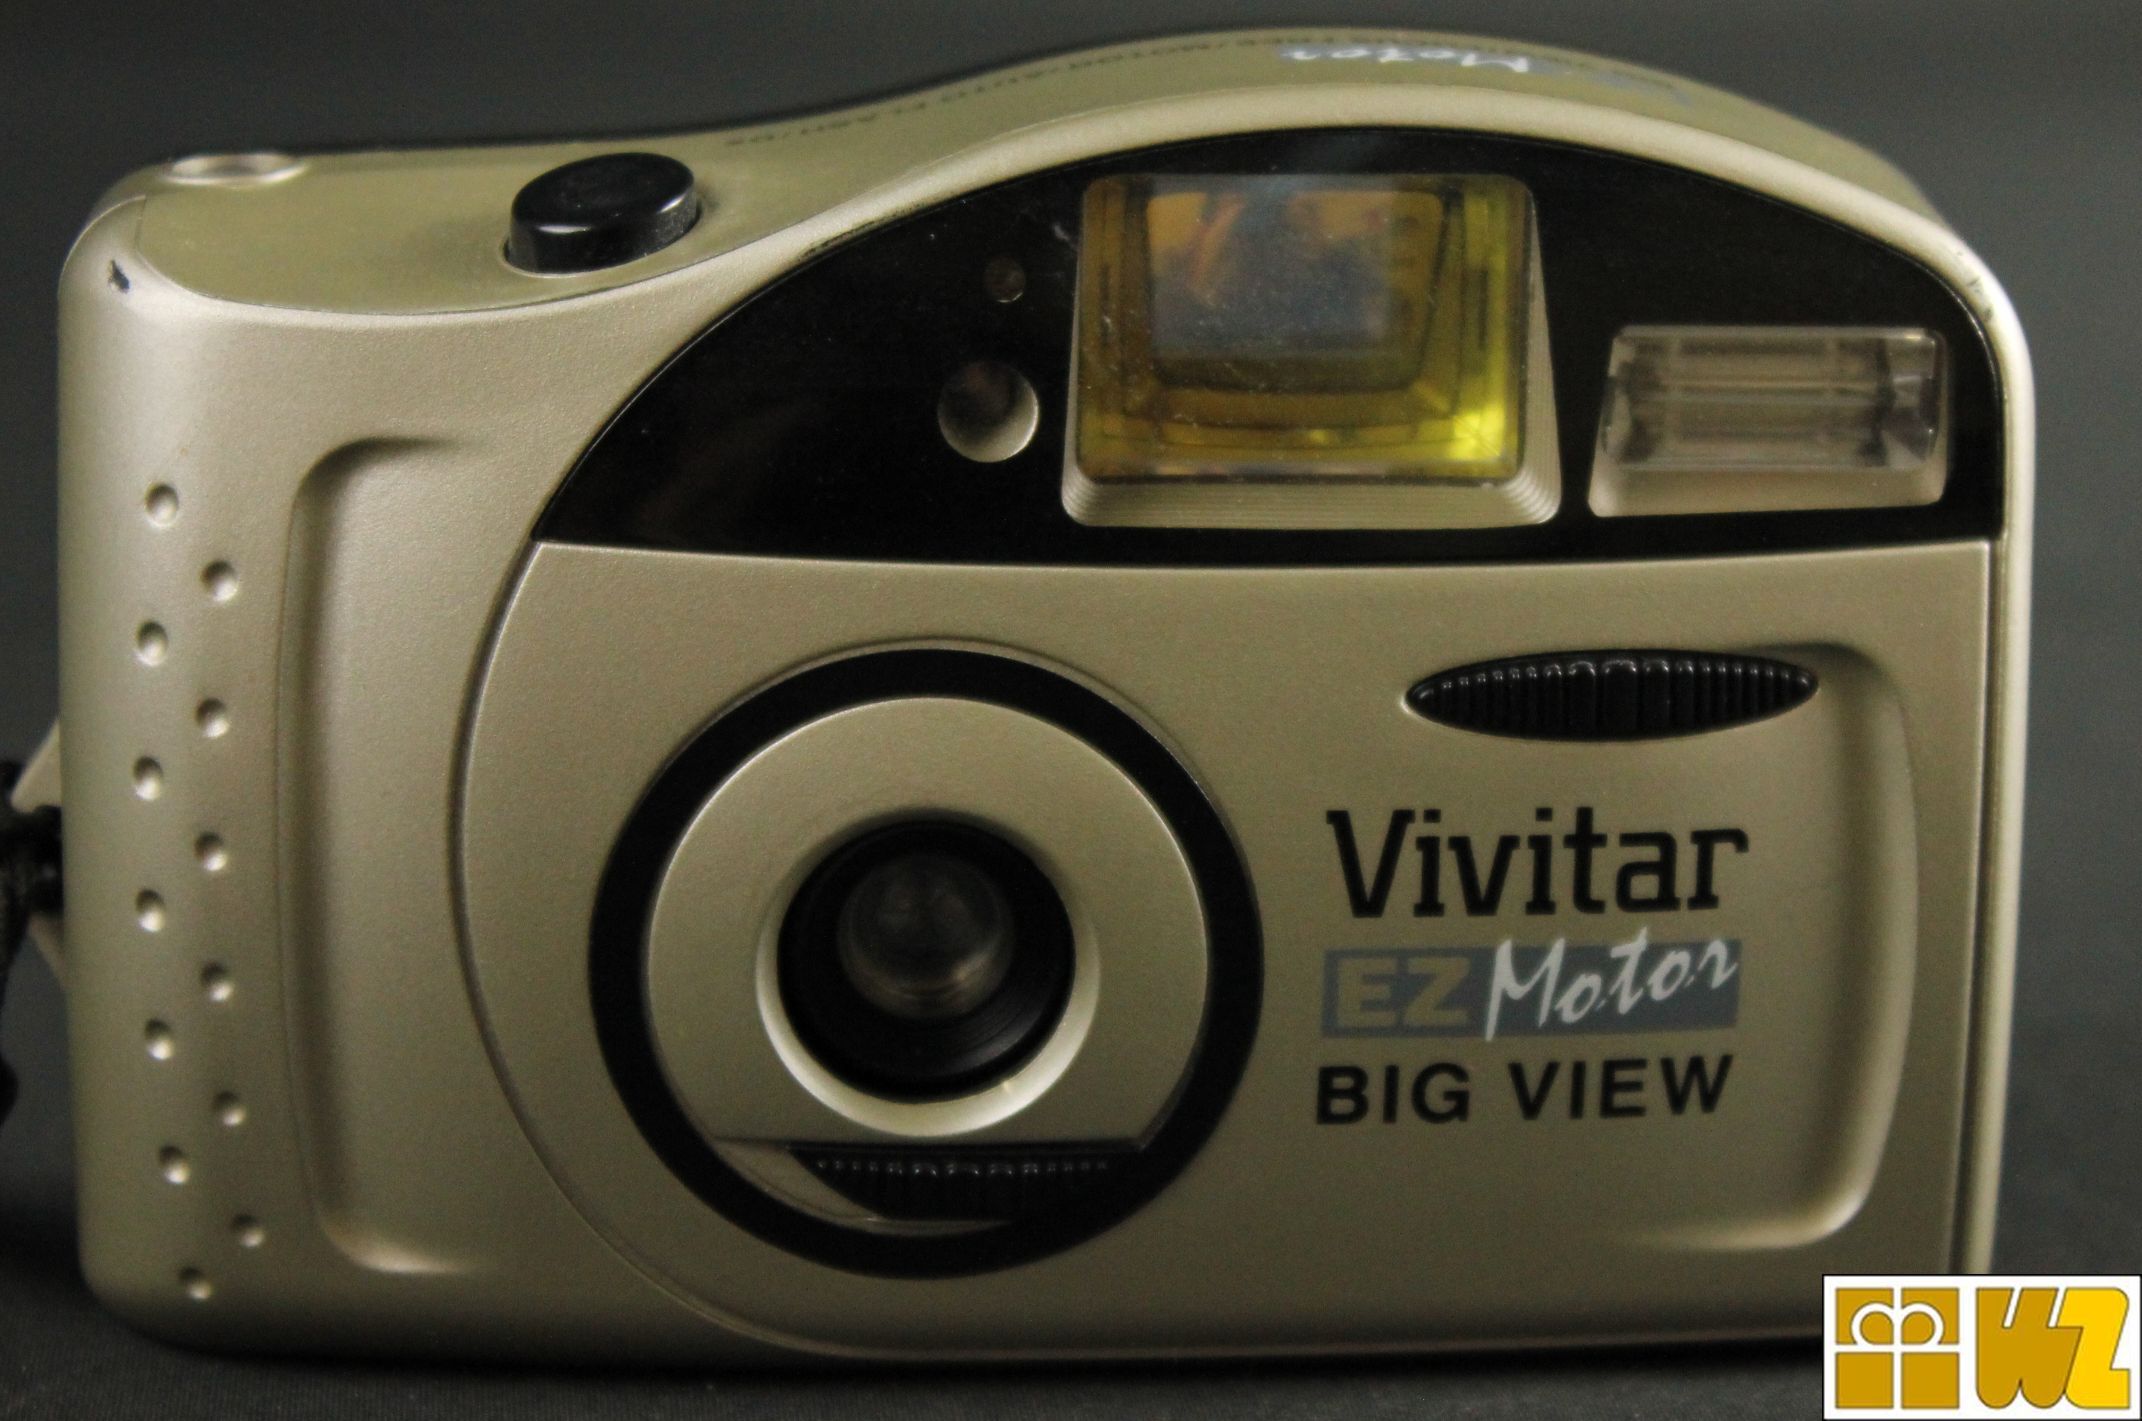 Vivitar EZ Motor Big View, 35mm Film Kompaktkamera, gebraucht